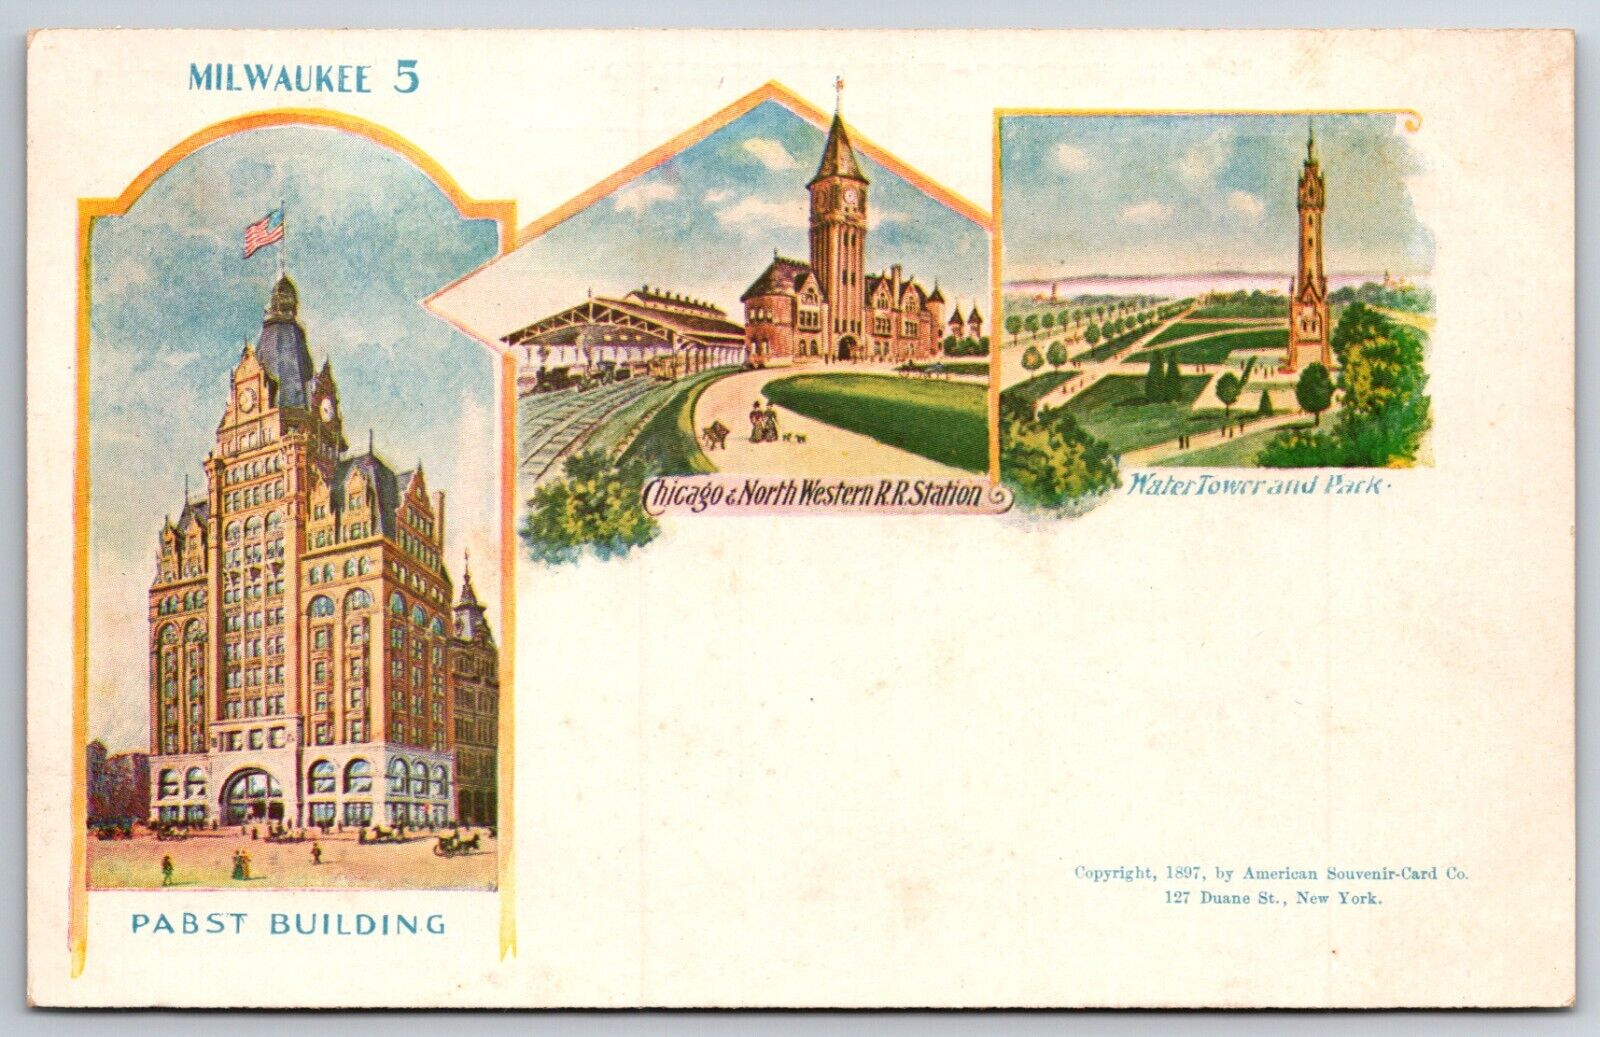 Pabst Building Milwaukee - American Souvenir Card Co. NP Post Card c1897